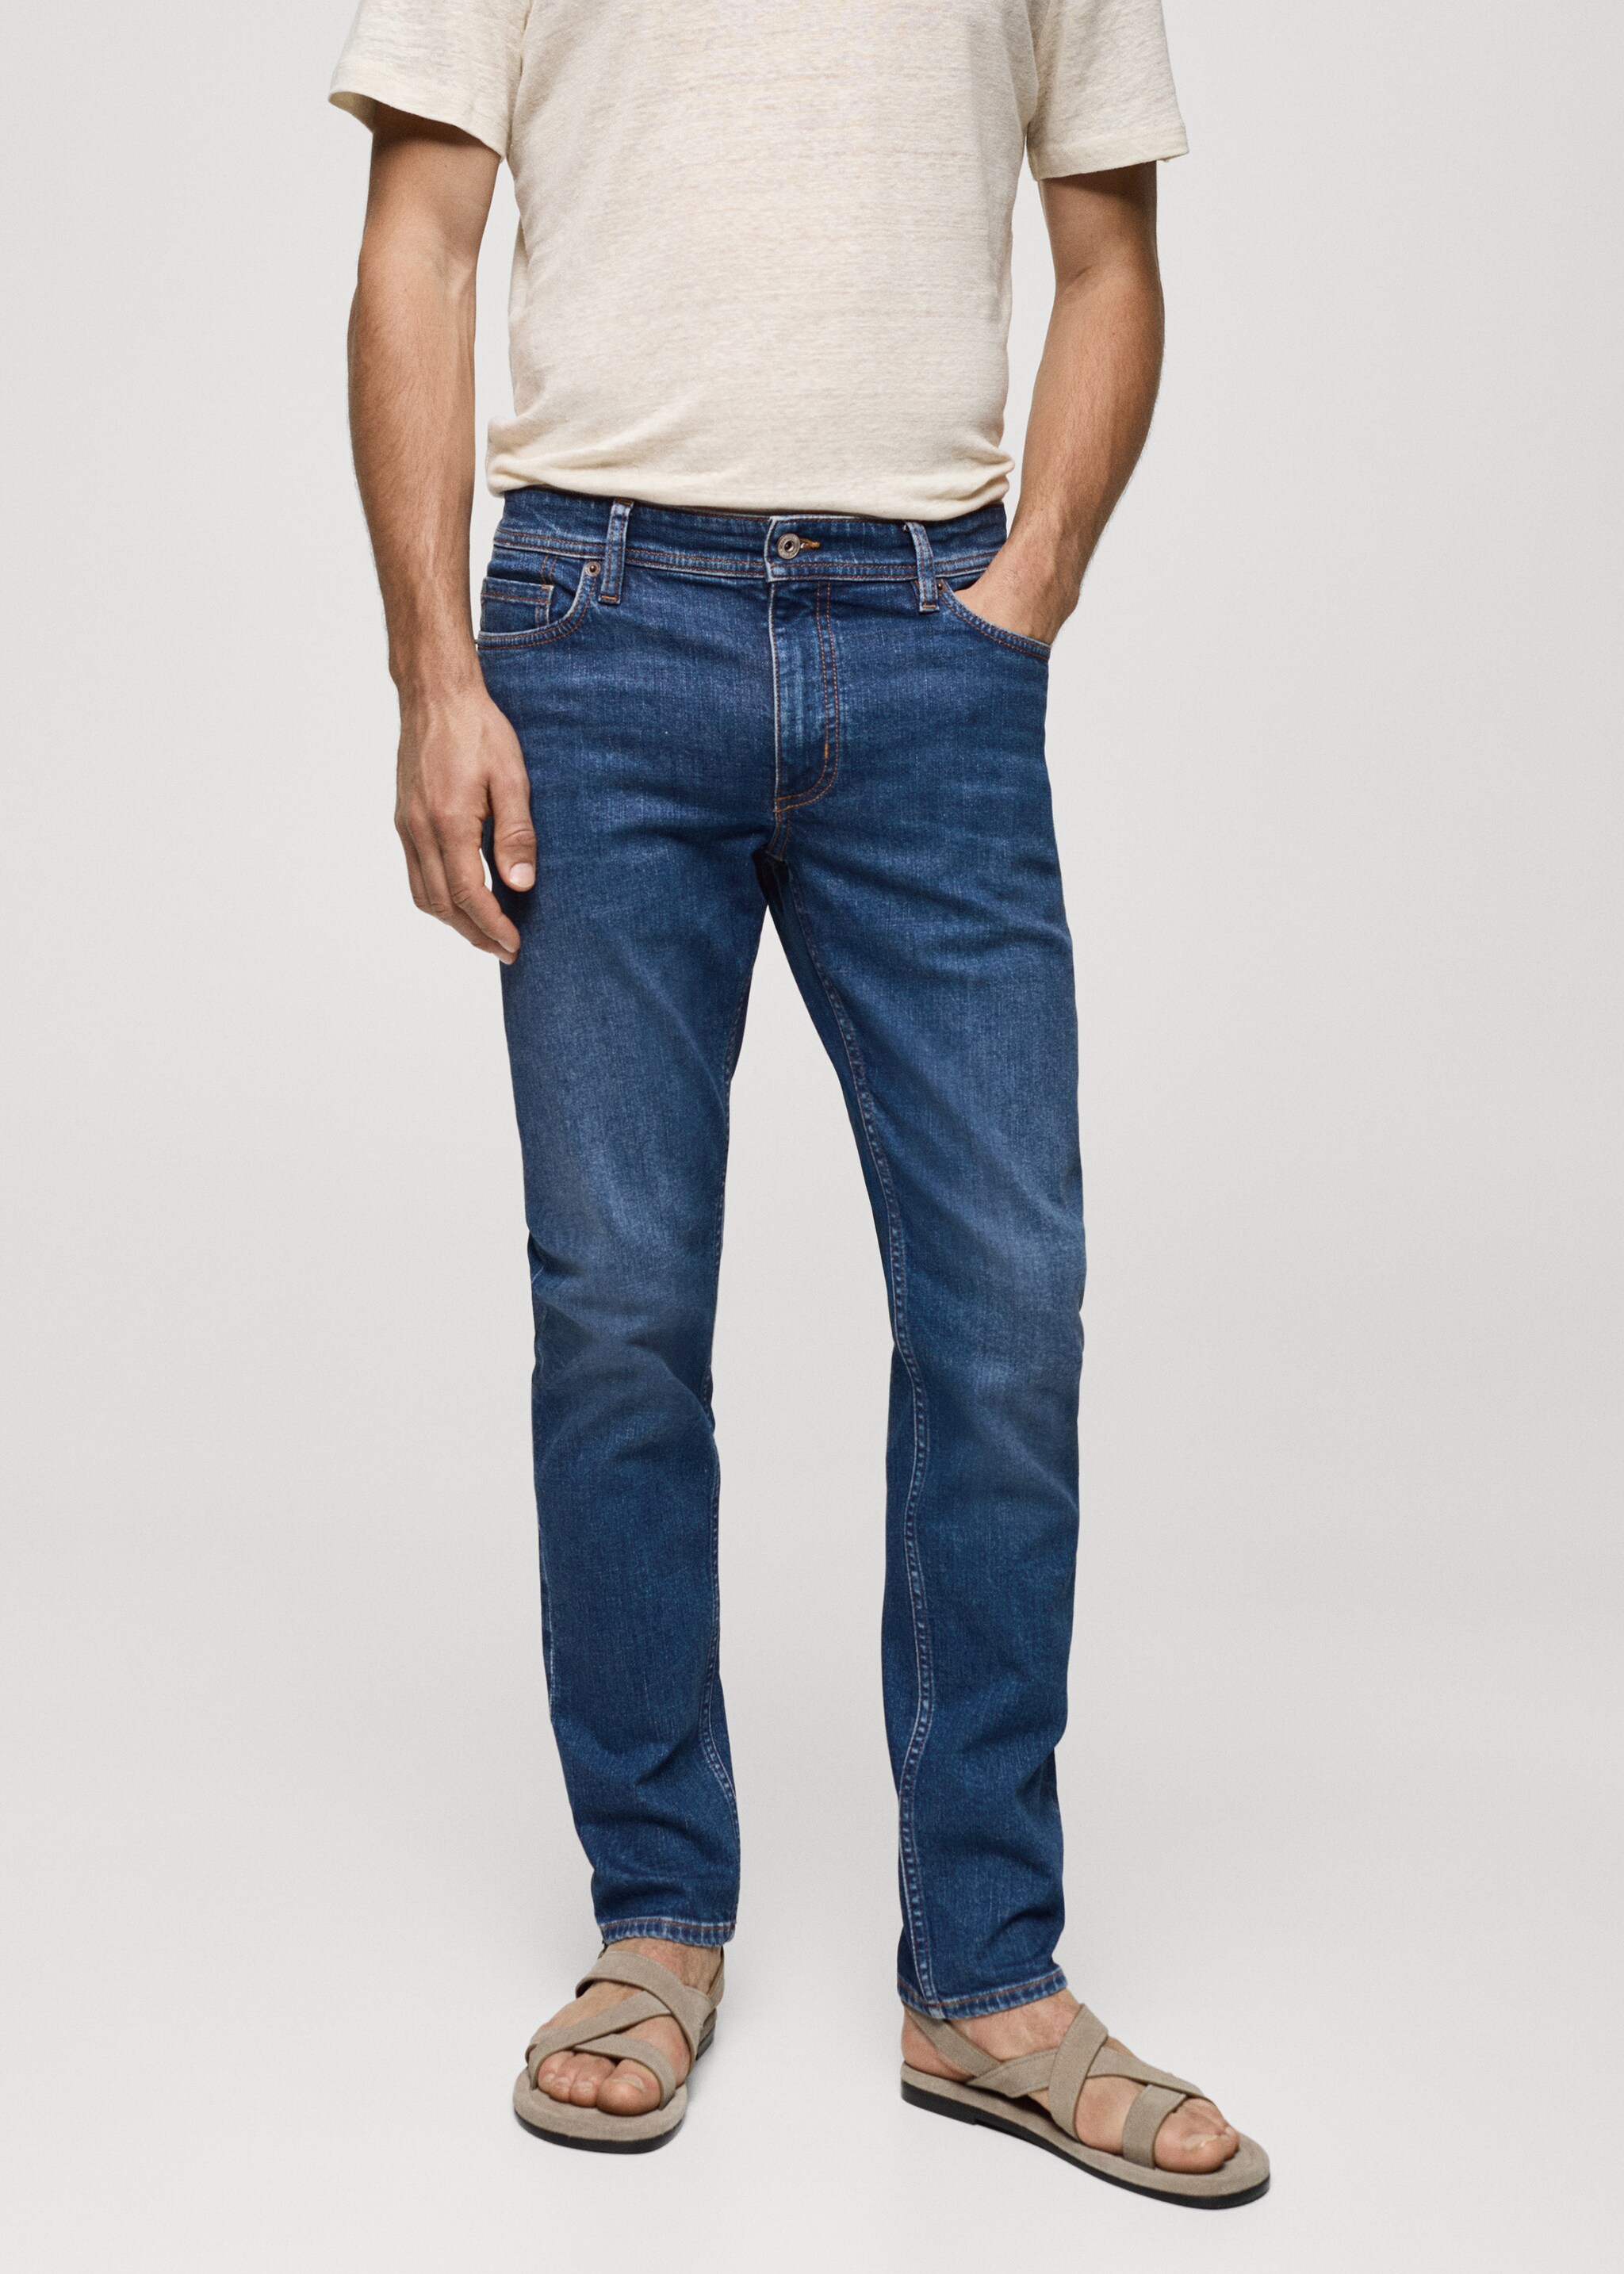 Jan slim fit jeans - Middenvlak